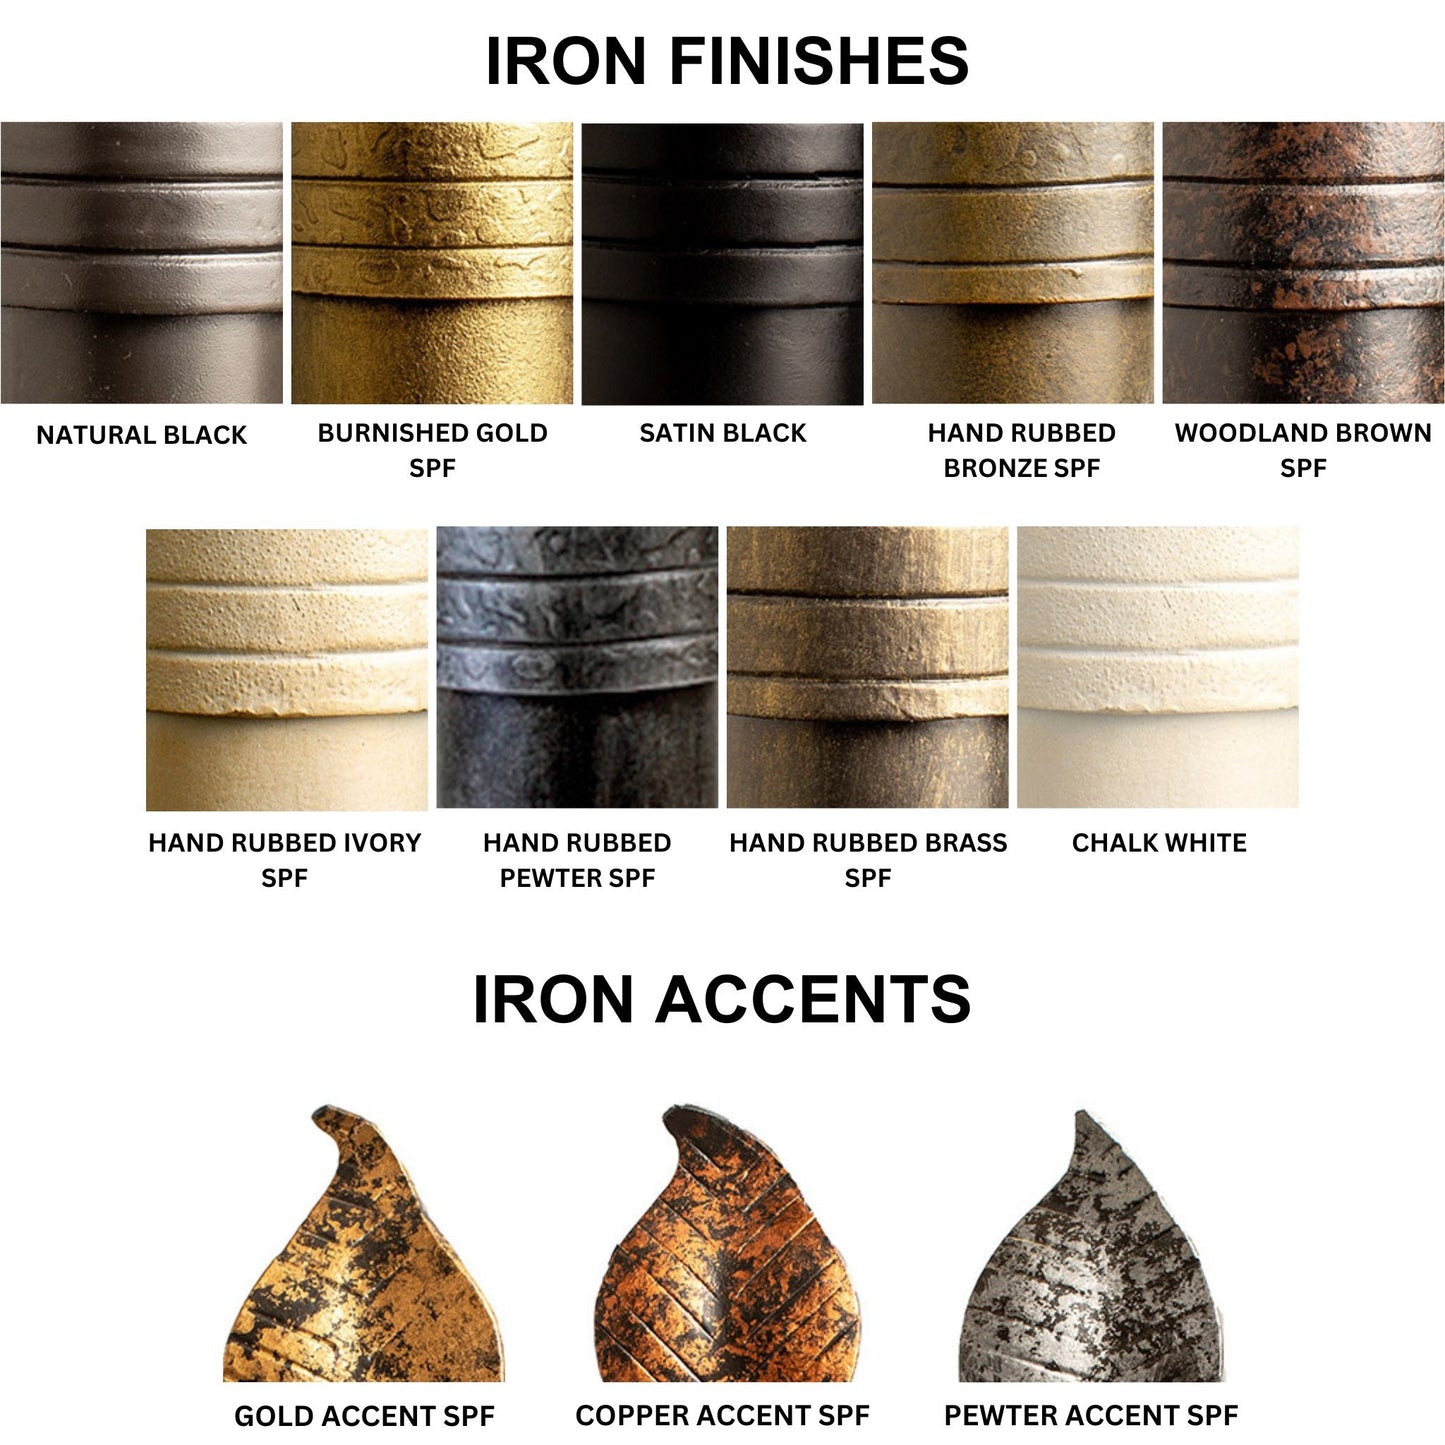 Stone County Ironworks Sassafras 16" Burnished Gold Iron Towel Bar With Gold Iron Accent